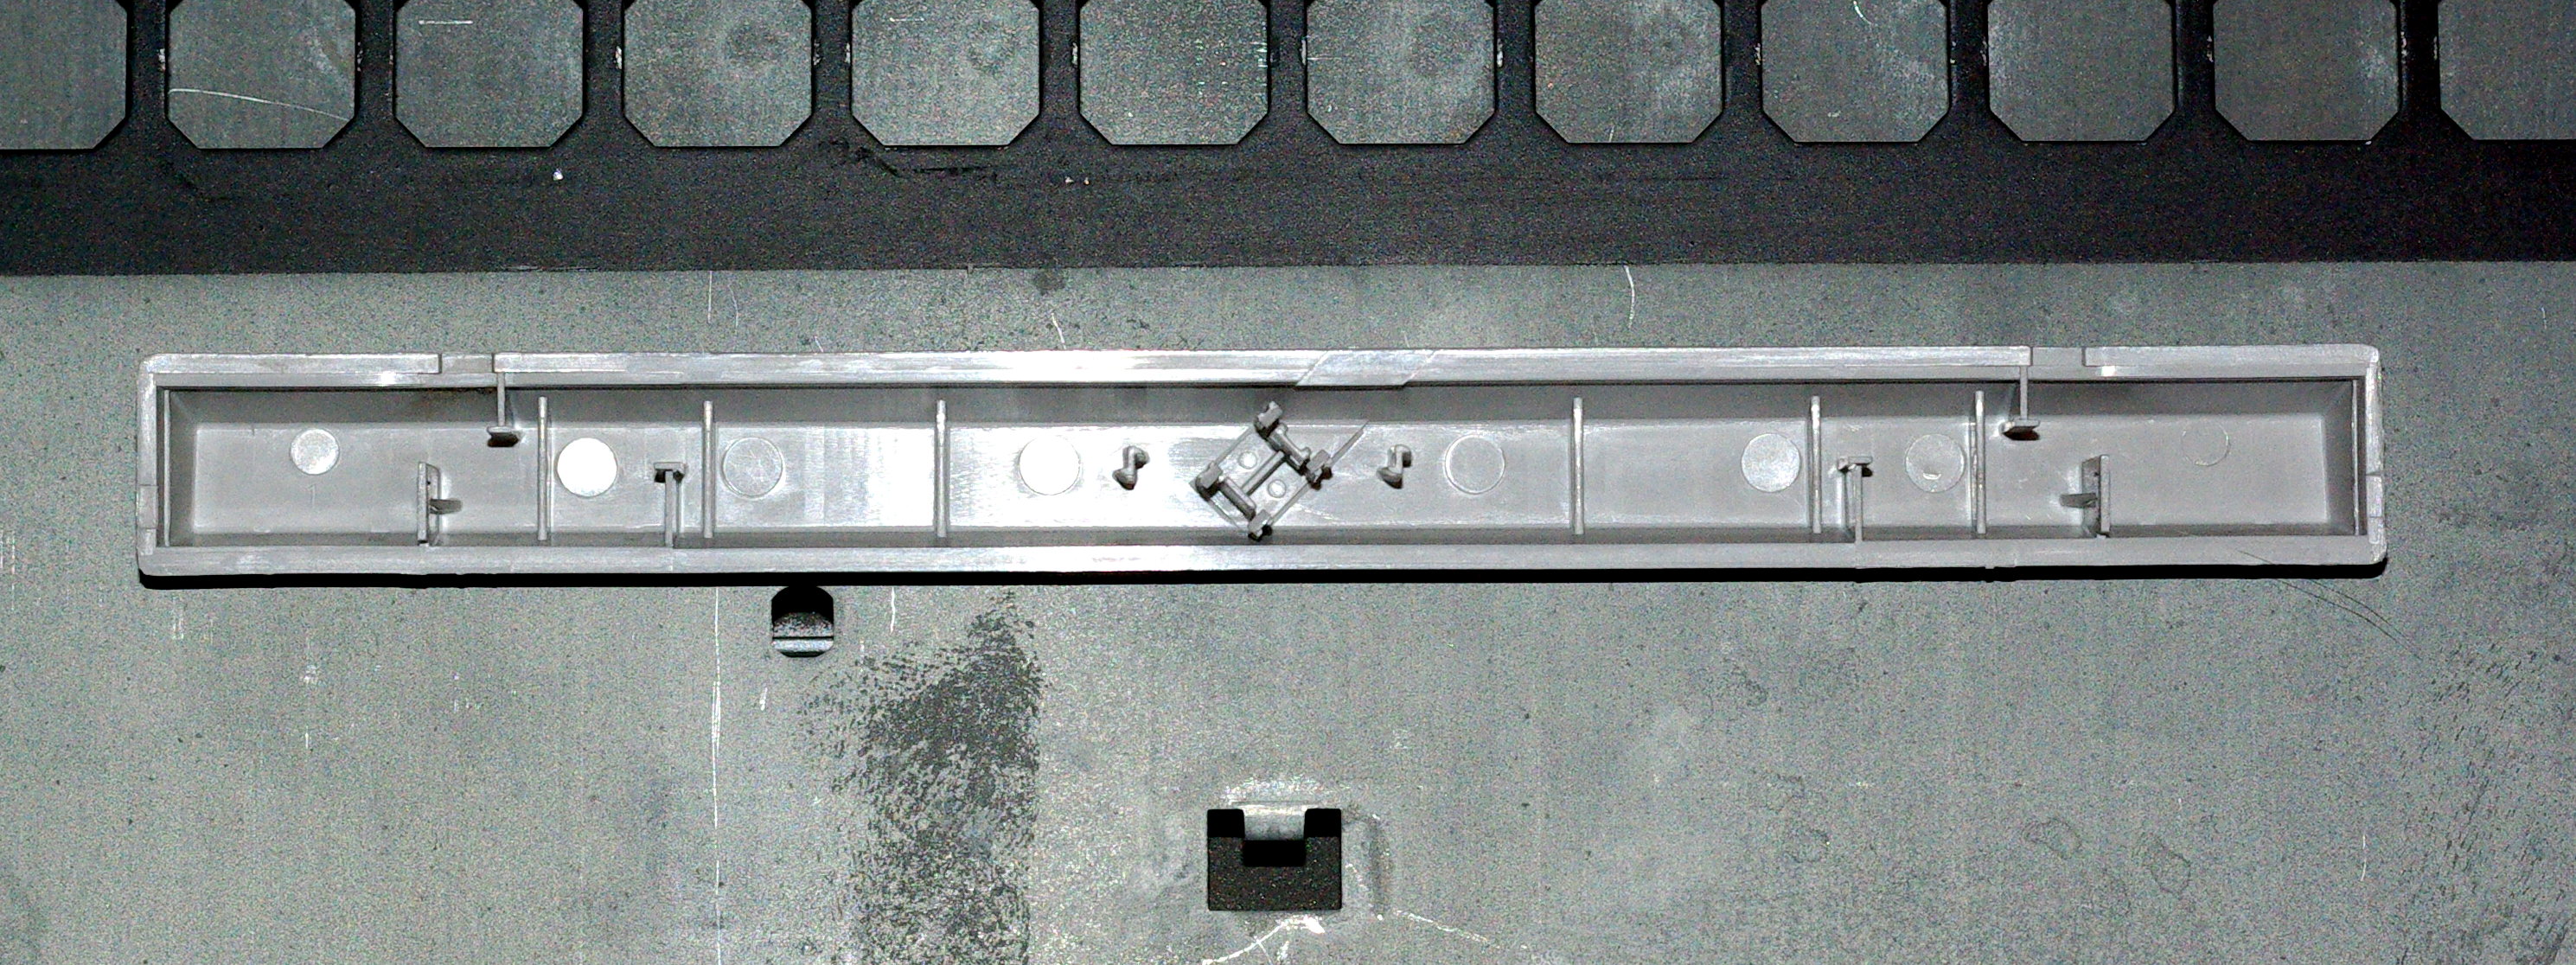 Olivetti ANK 2463 spacebar.JPG